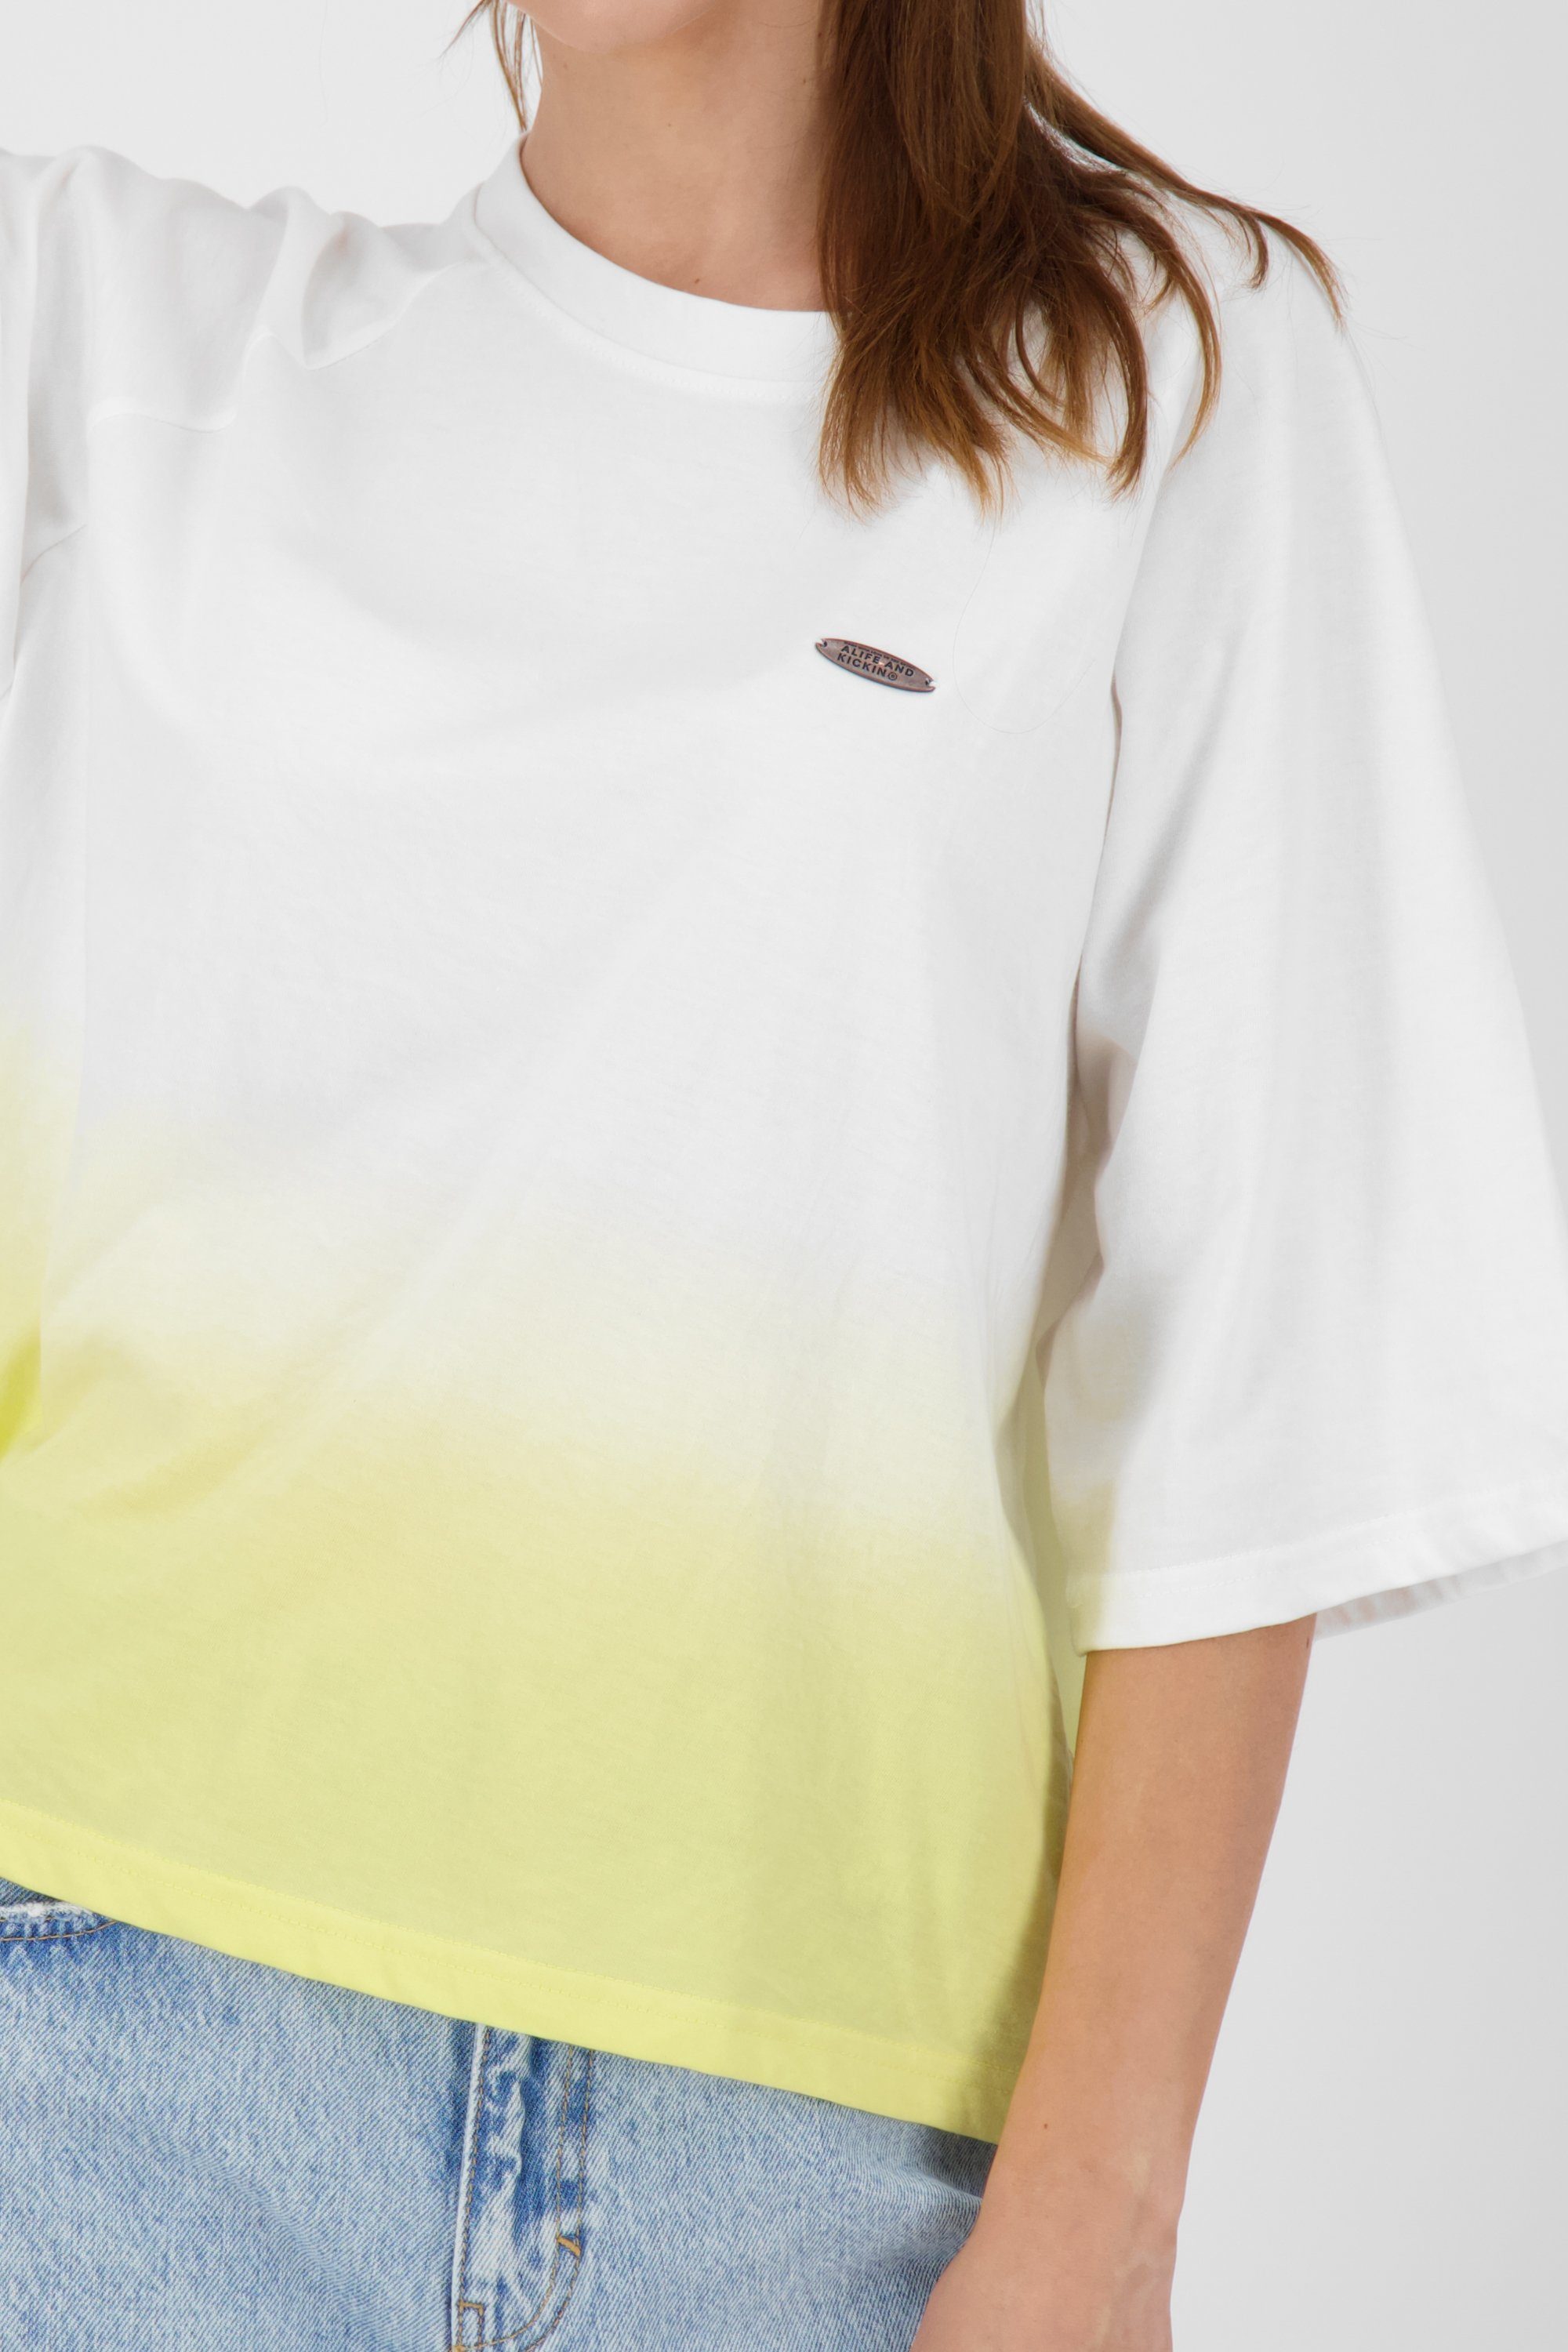 Alife & Damen RubyAK Kickin lemonade B Rundhalsshirt Shirt Shirt